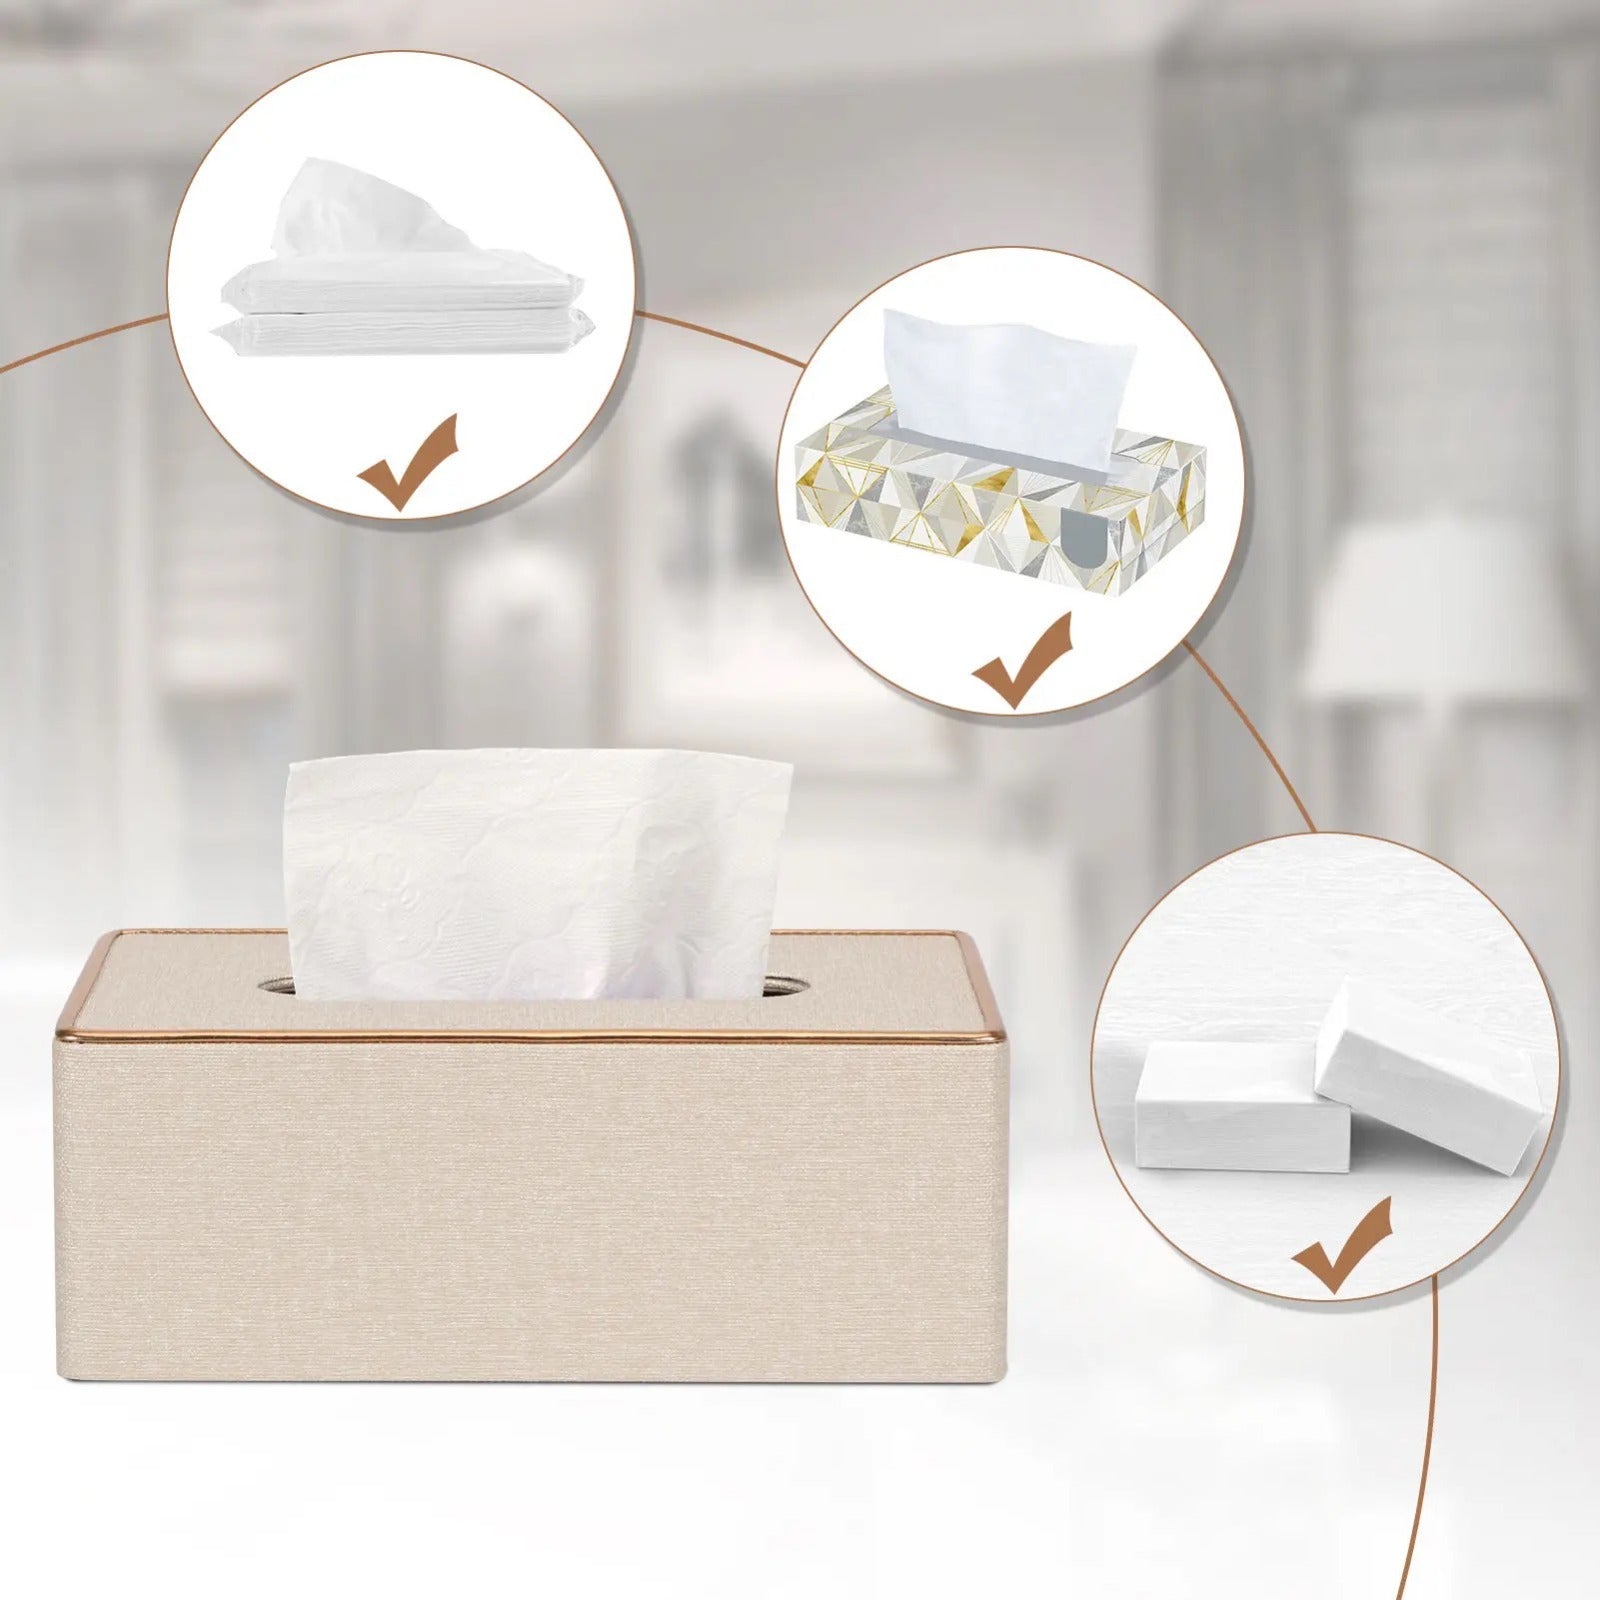 Rectangular Tissue Box Holder with usage instructions